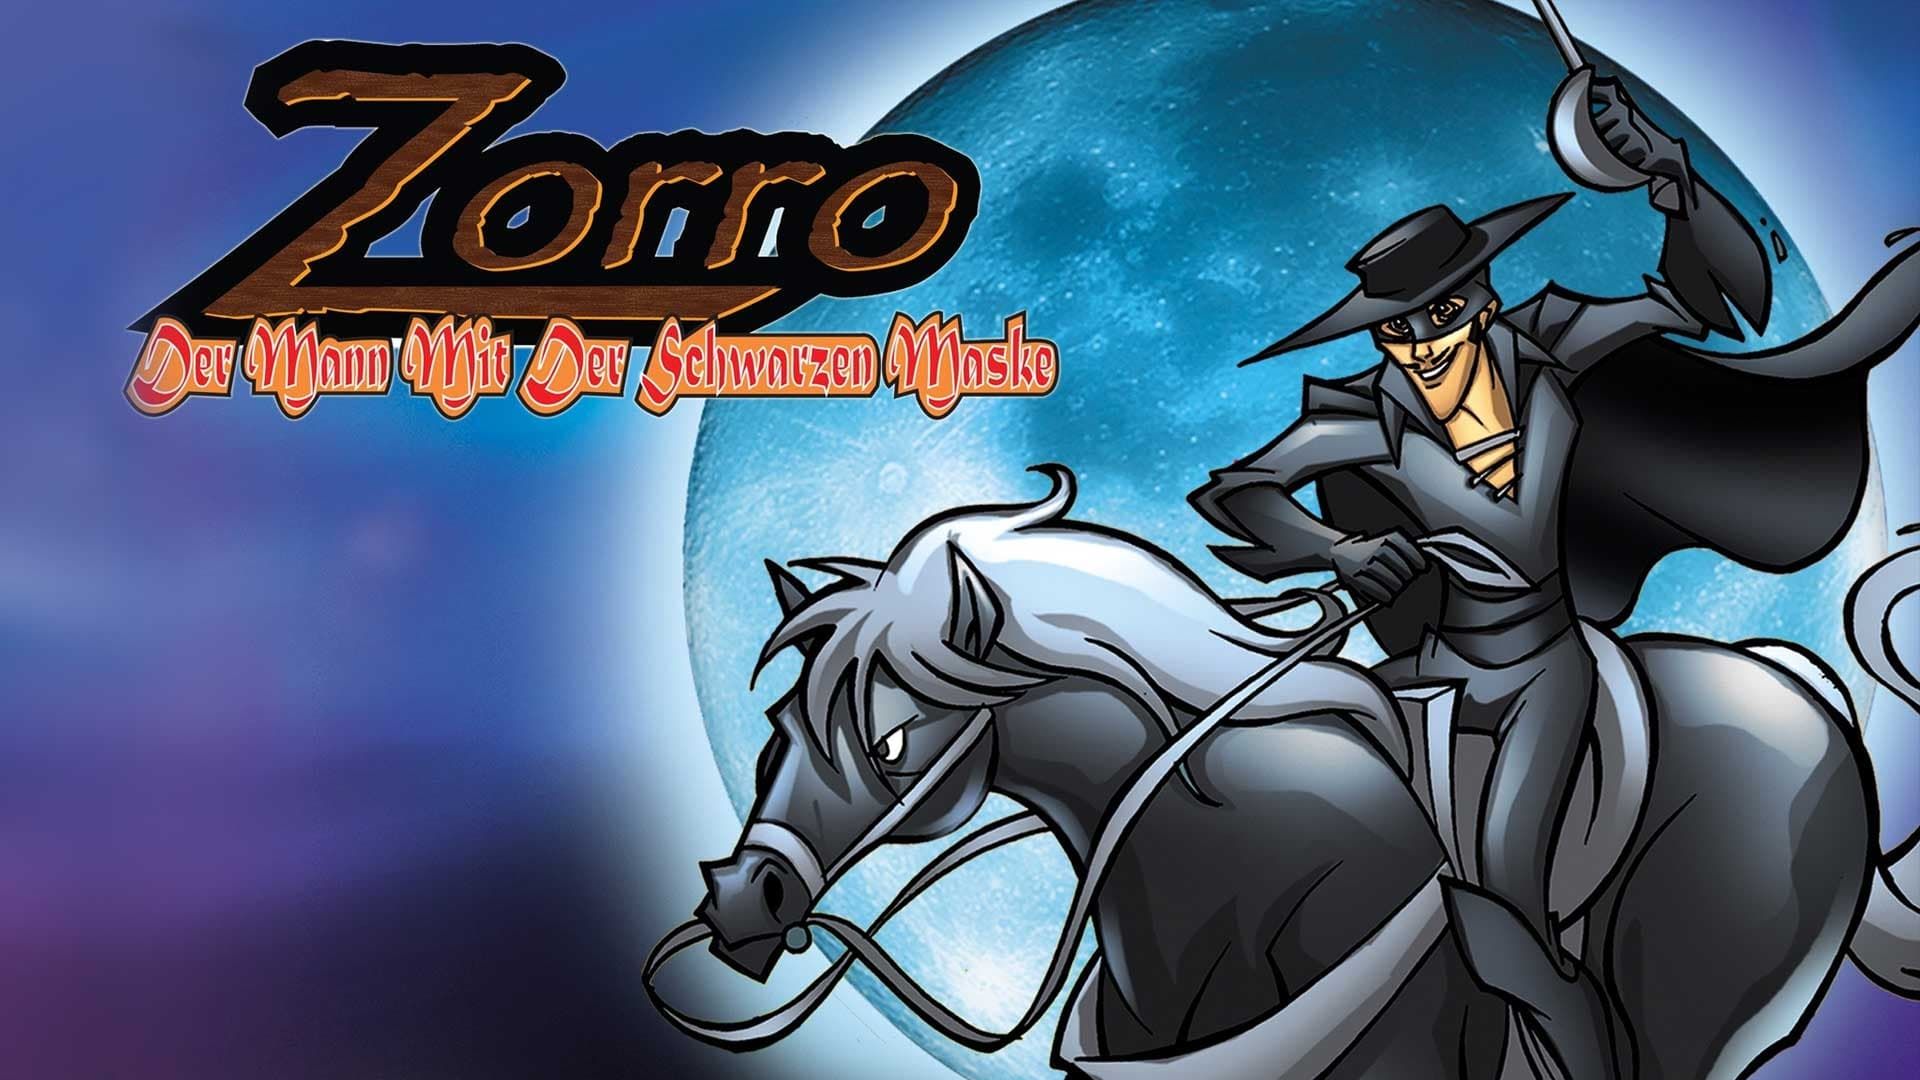 The Amazing Zorro background